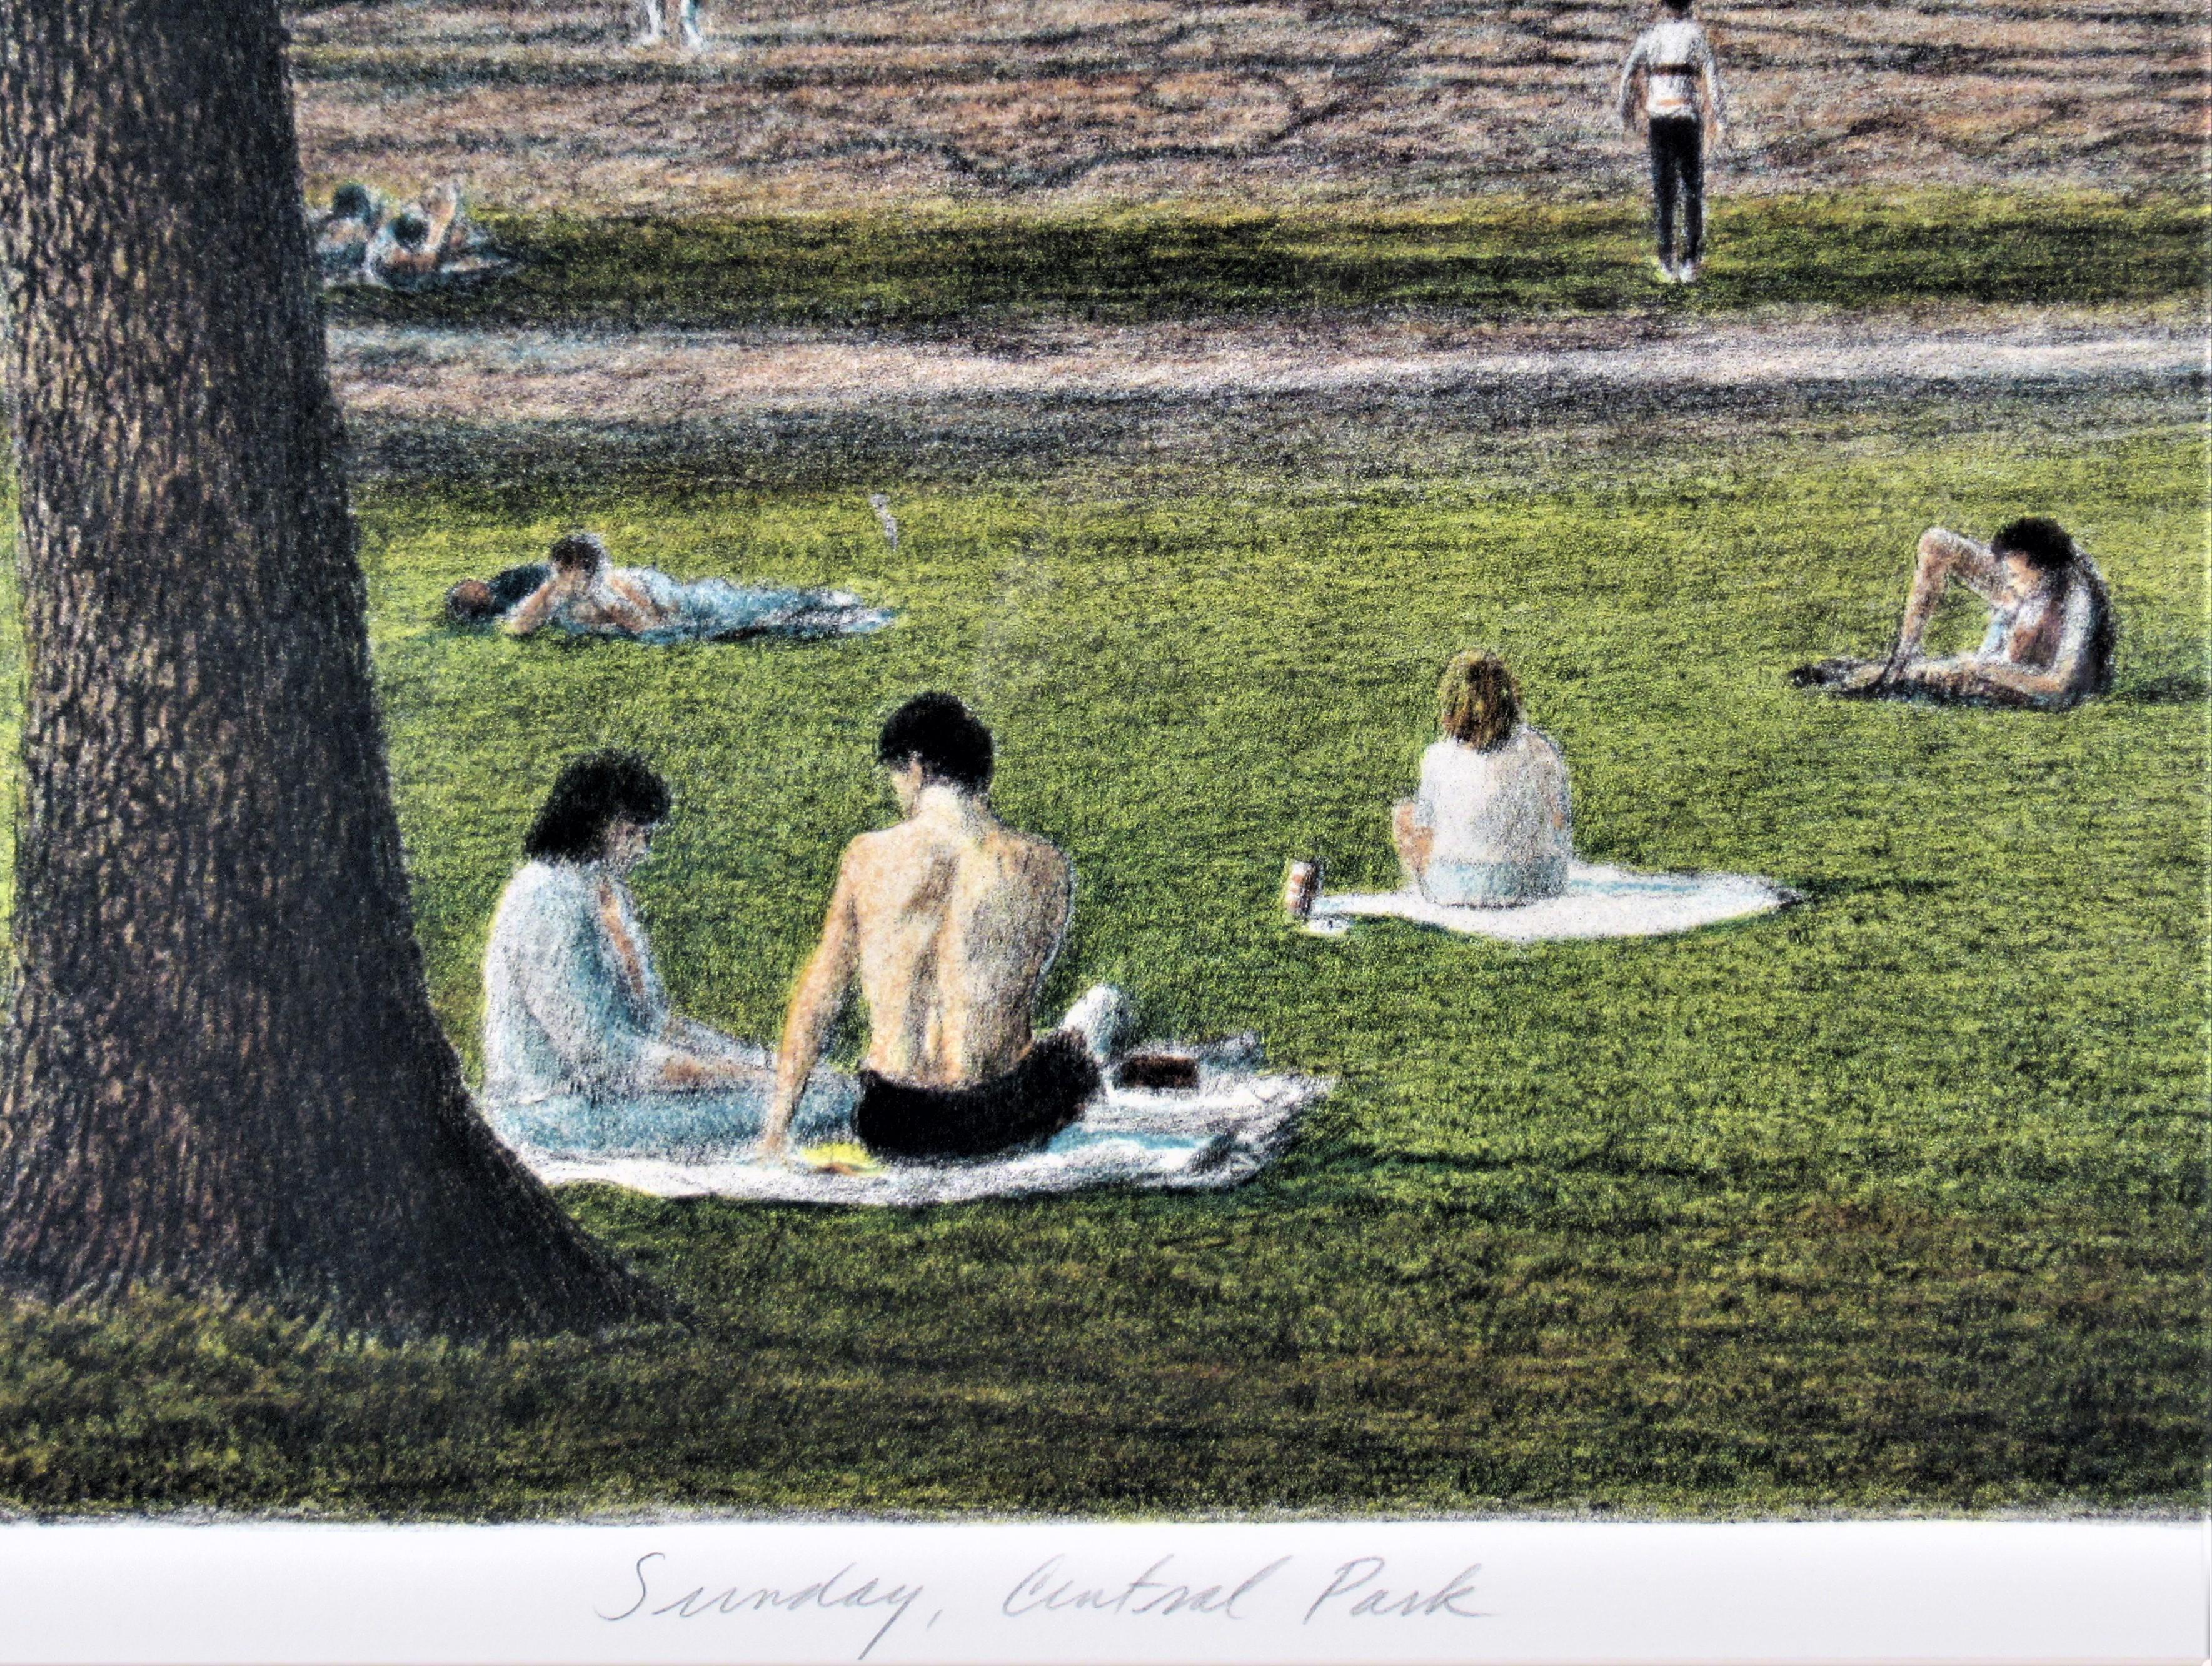 Sunday, Central Park - Black Figurative Print by Harold Altman